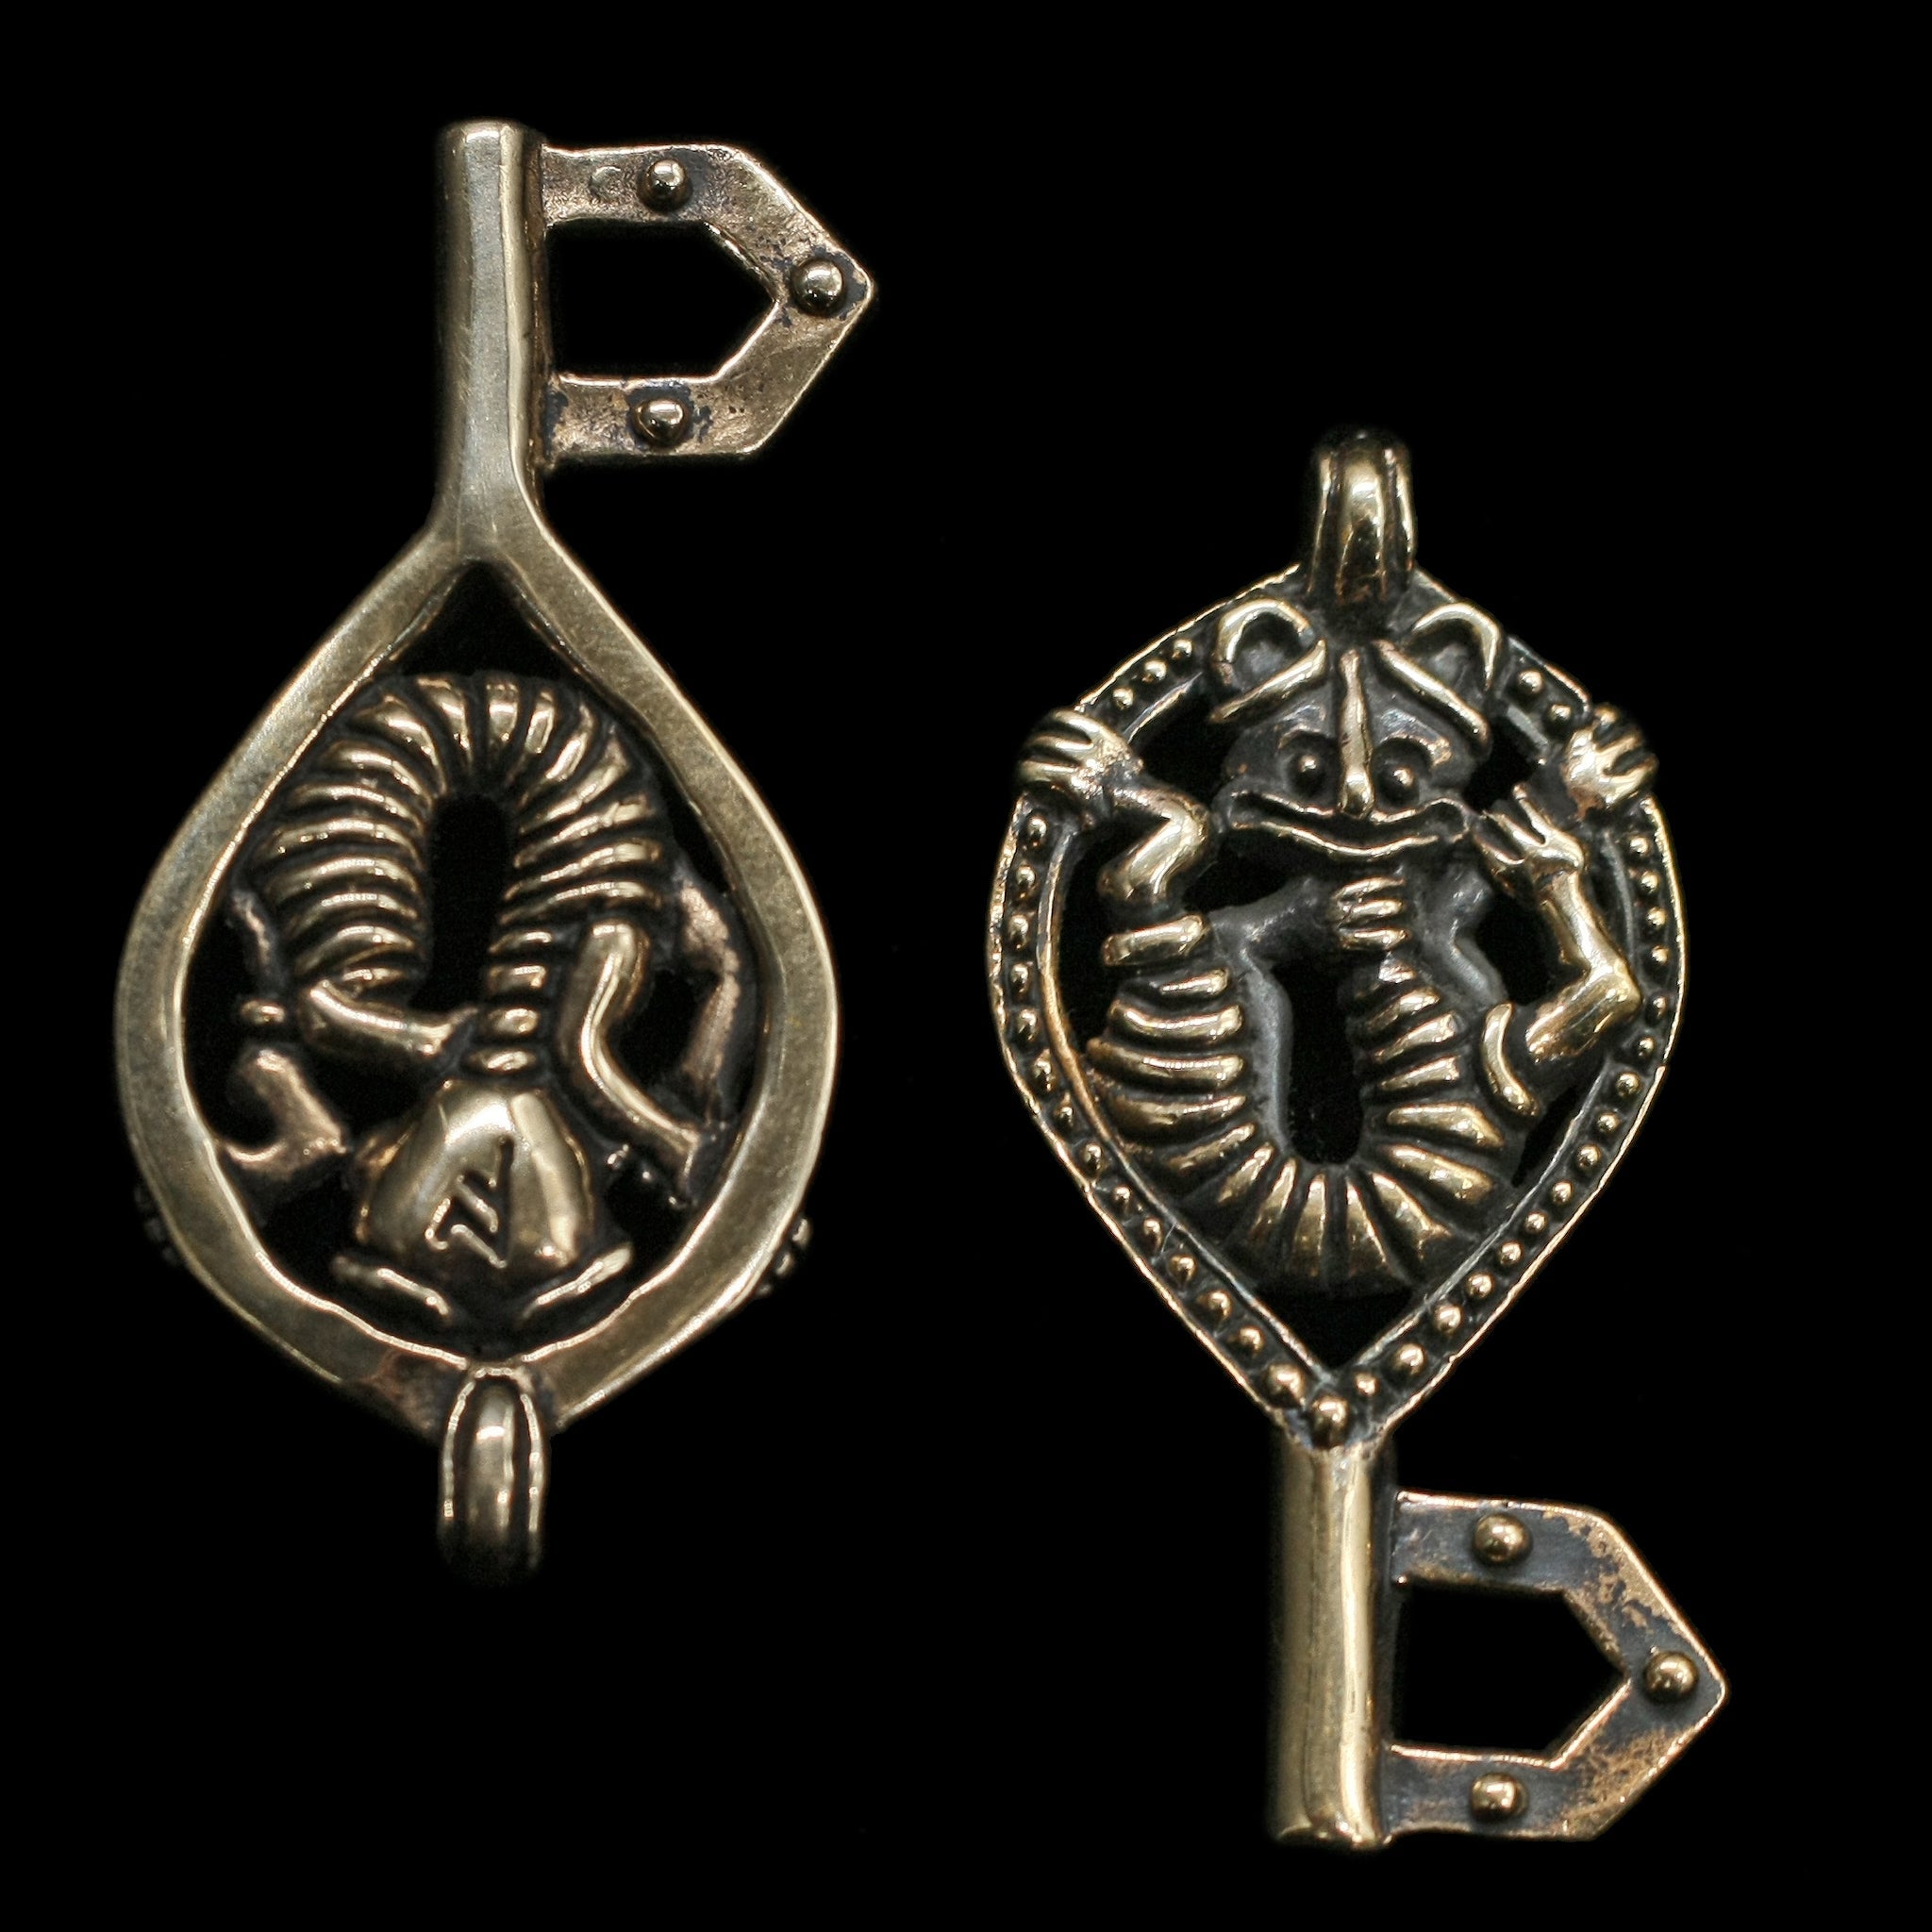 Bronze Viking Gripping Bear Key Pendant - Front & Back